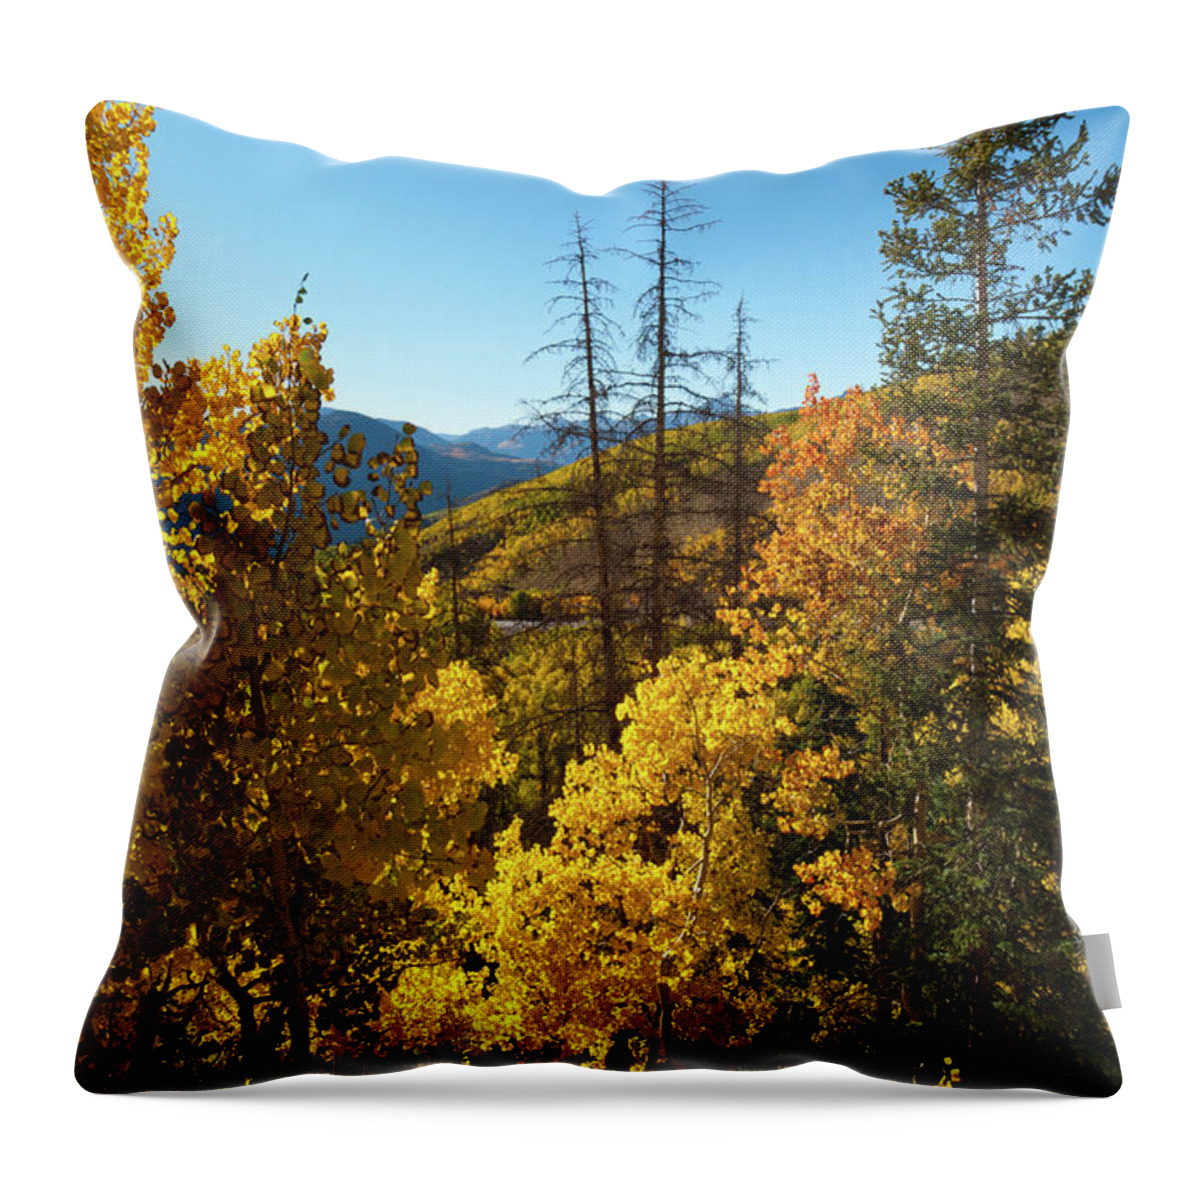 Slumgullion Pass Throw Pillow featuring the photograph Slumgullion Pass Autumn Landscape by Cascade Colors